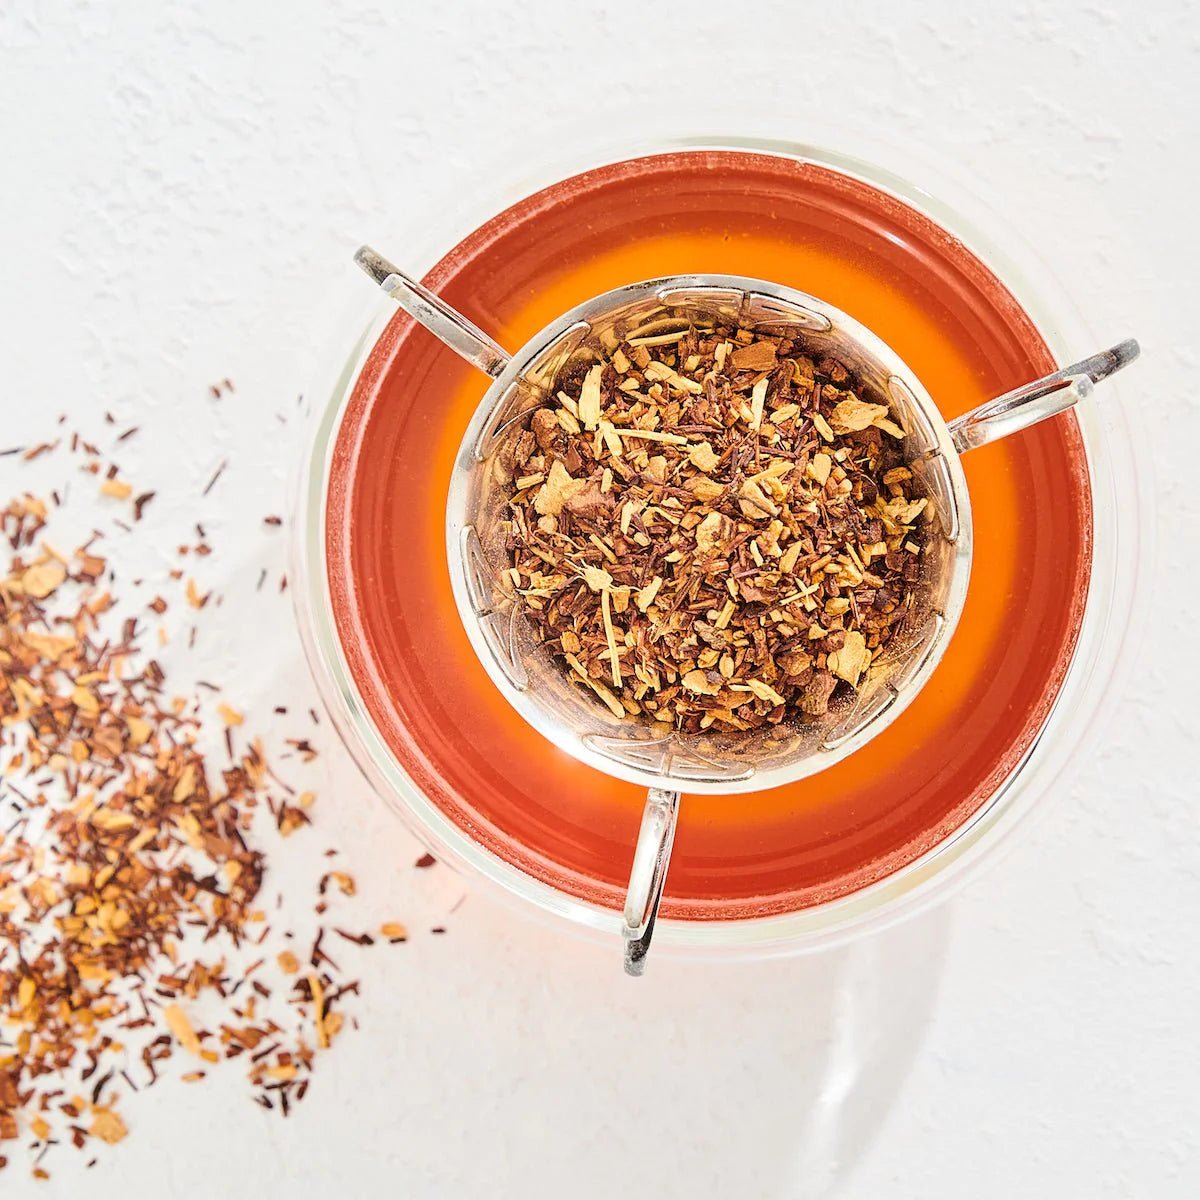 Loose Leaf Tea: Steeping Up the Flavor - Magic Hour